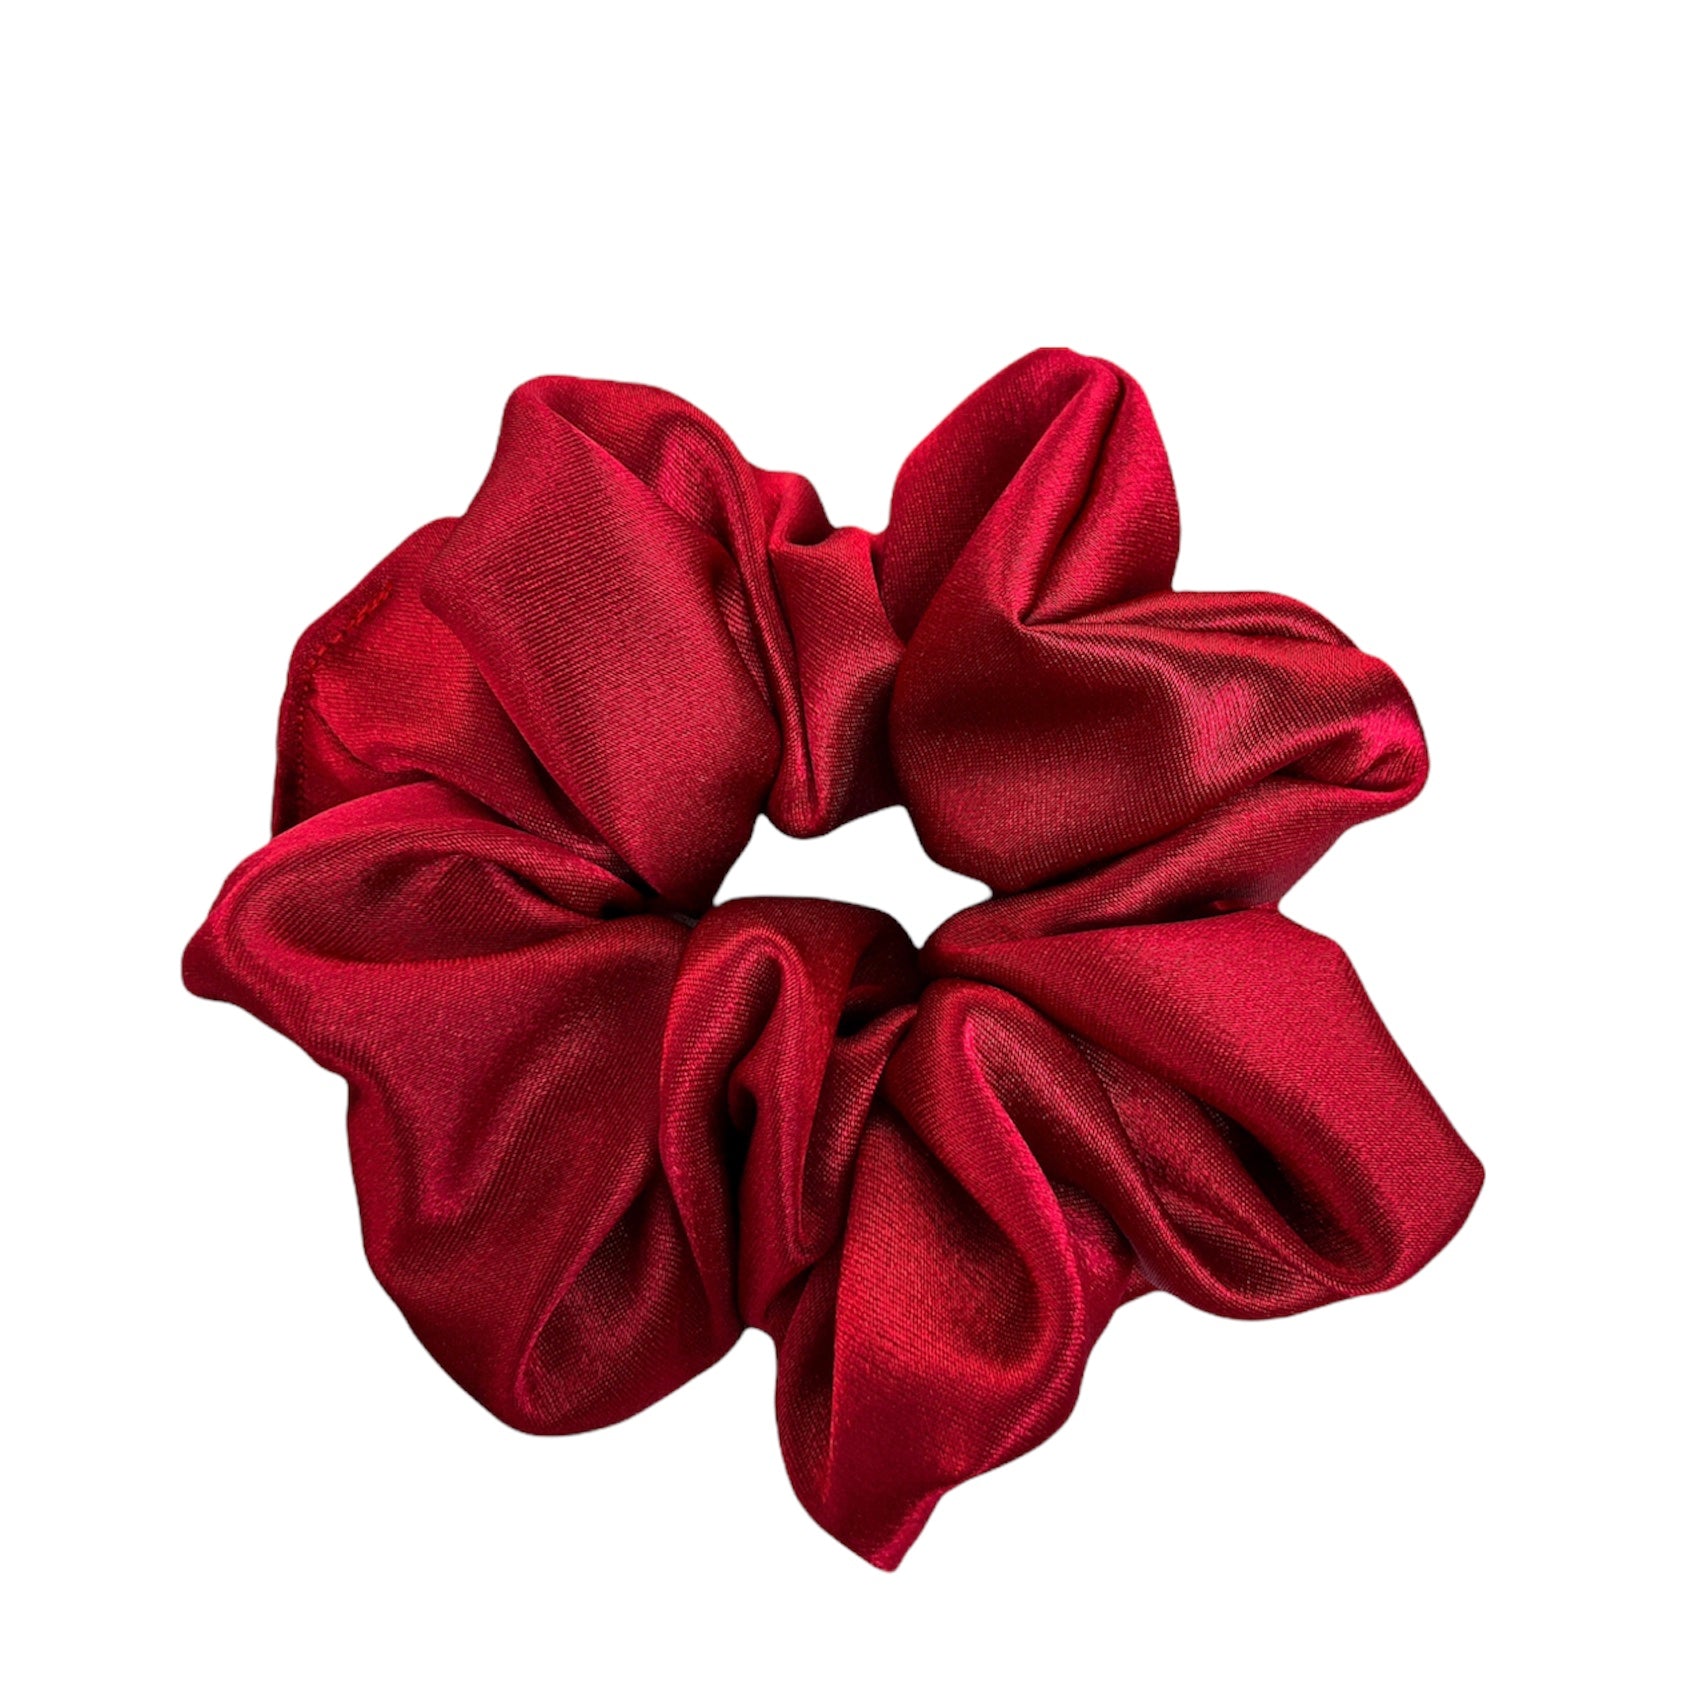 Regular Scarlet Scrunchie. An average sized bold red satin scrunchie. 